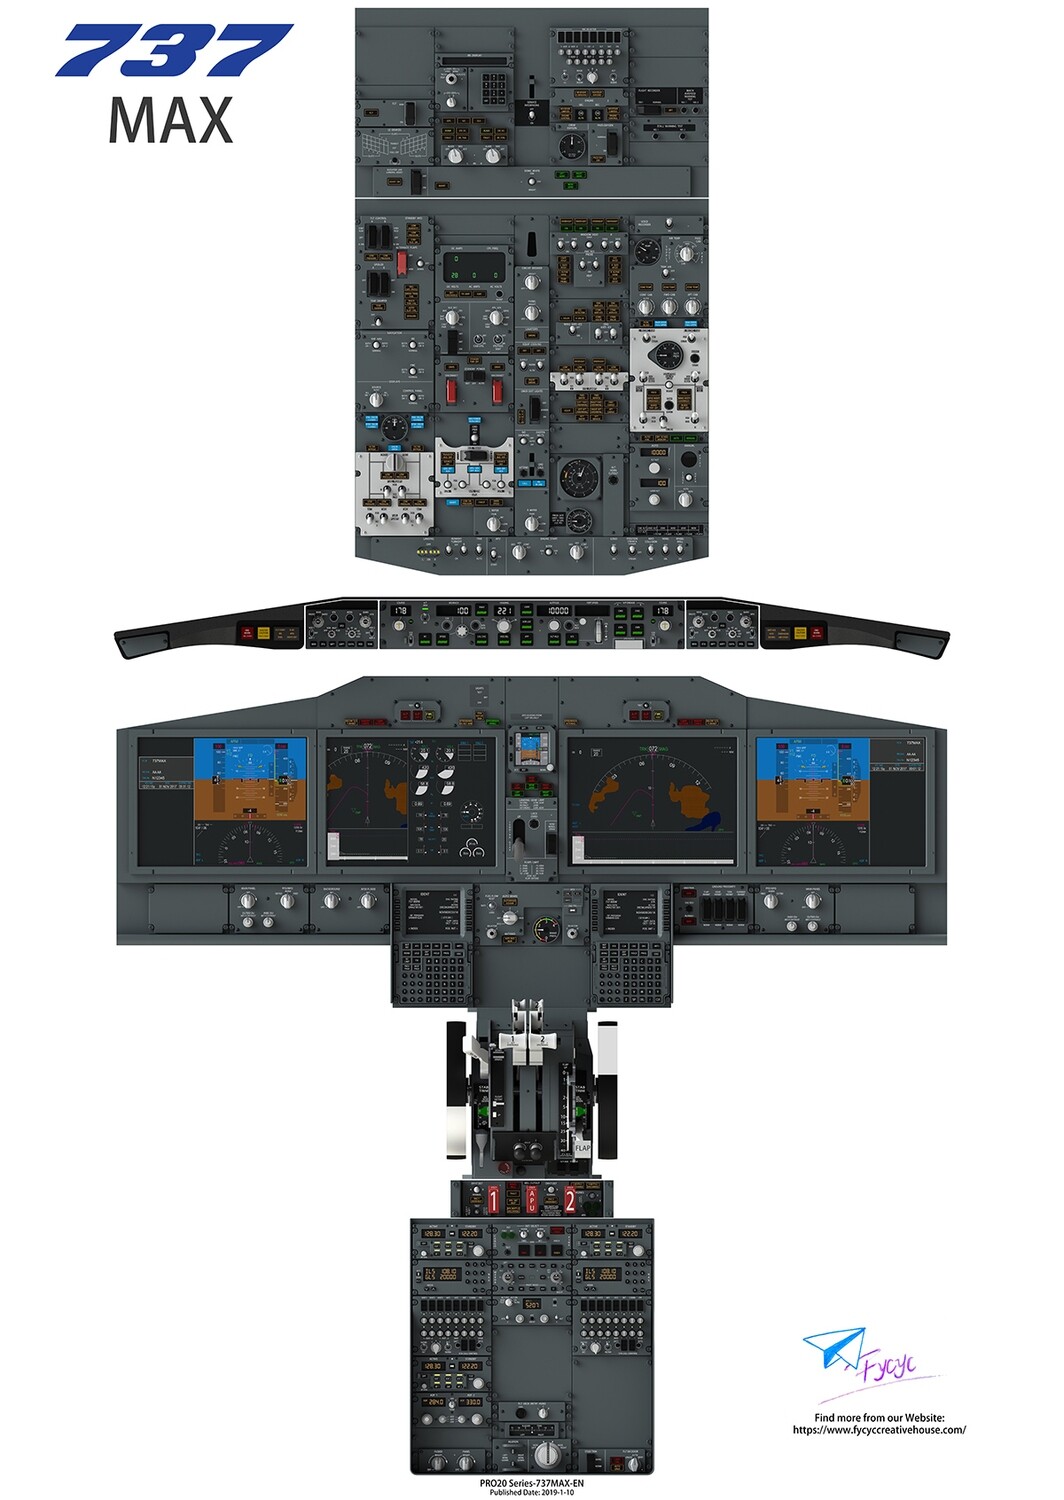 B737MAX Cockpit Poster